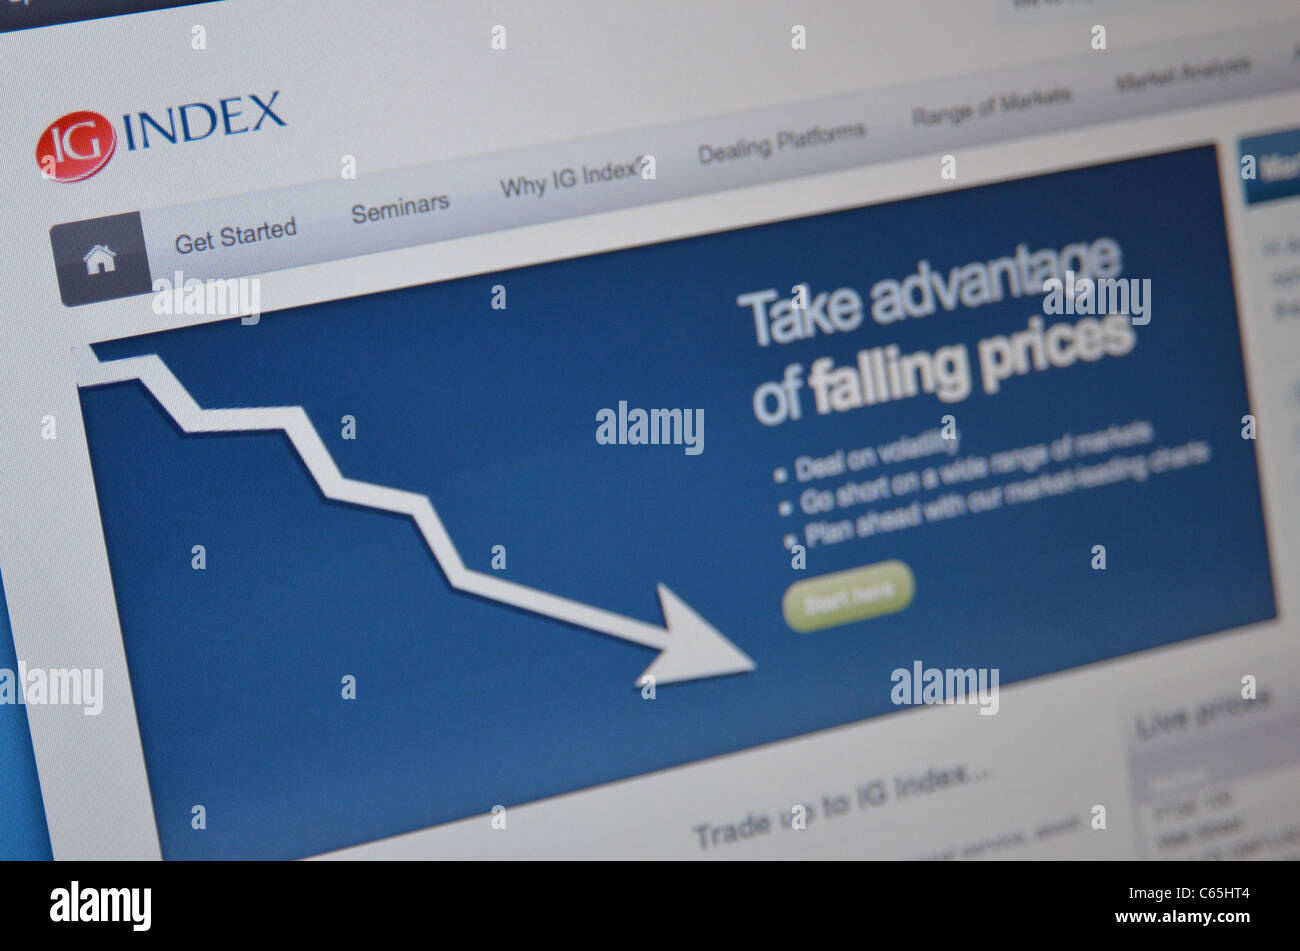 IG Index spread betting trading platform online Stock Photo - Alamy